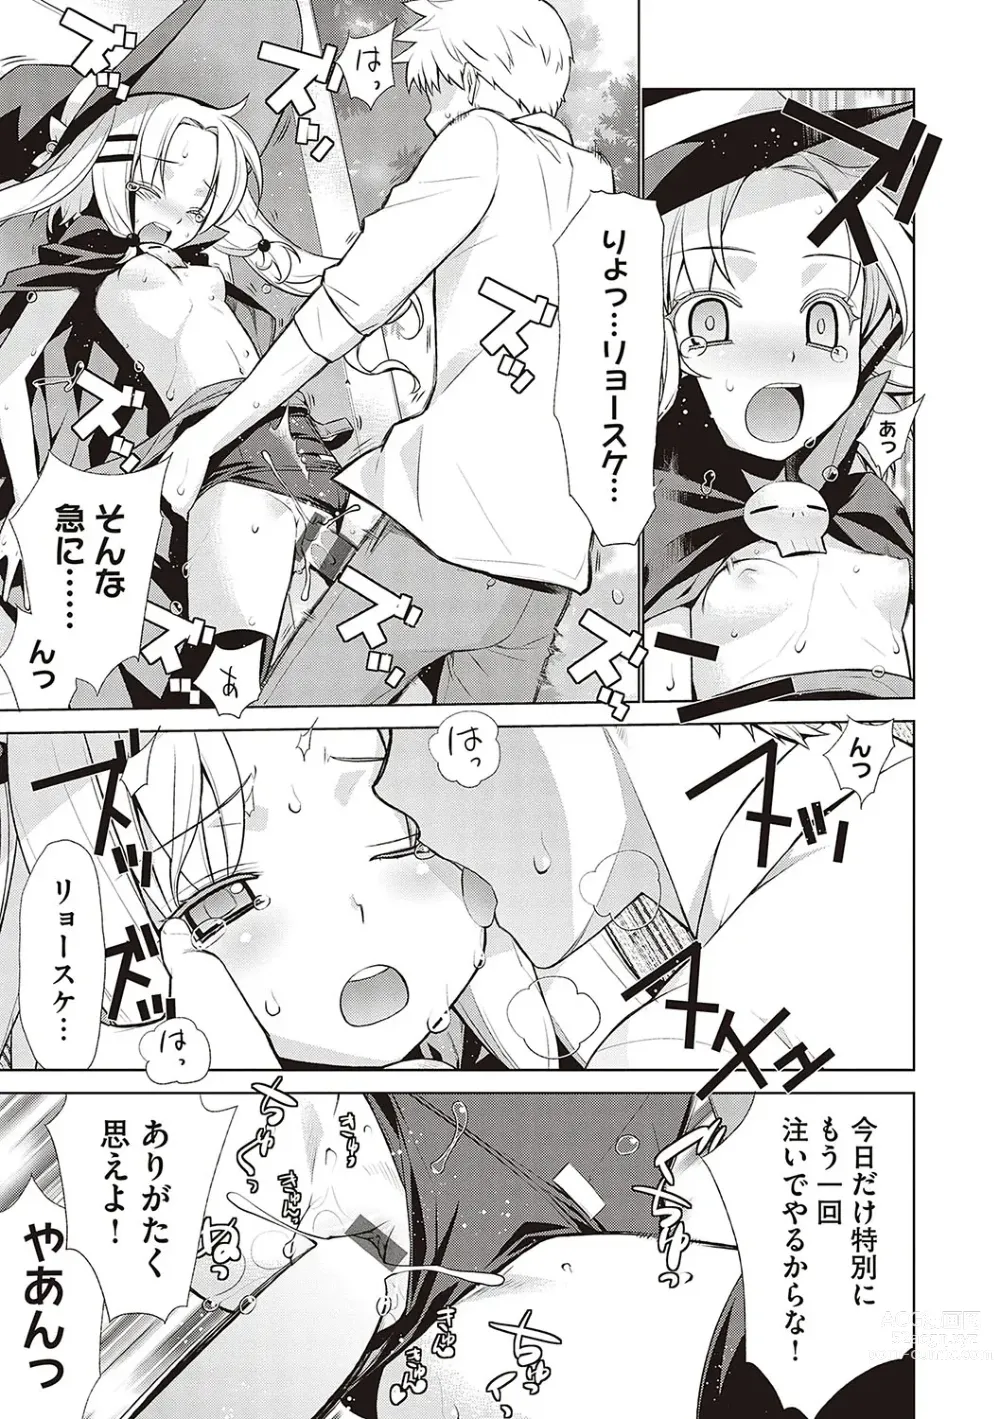 Page 262 of manga KOAKUMA DAISY